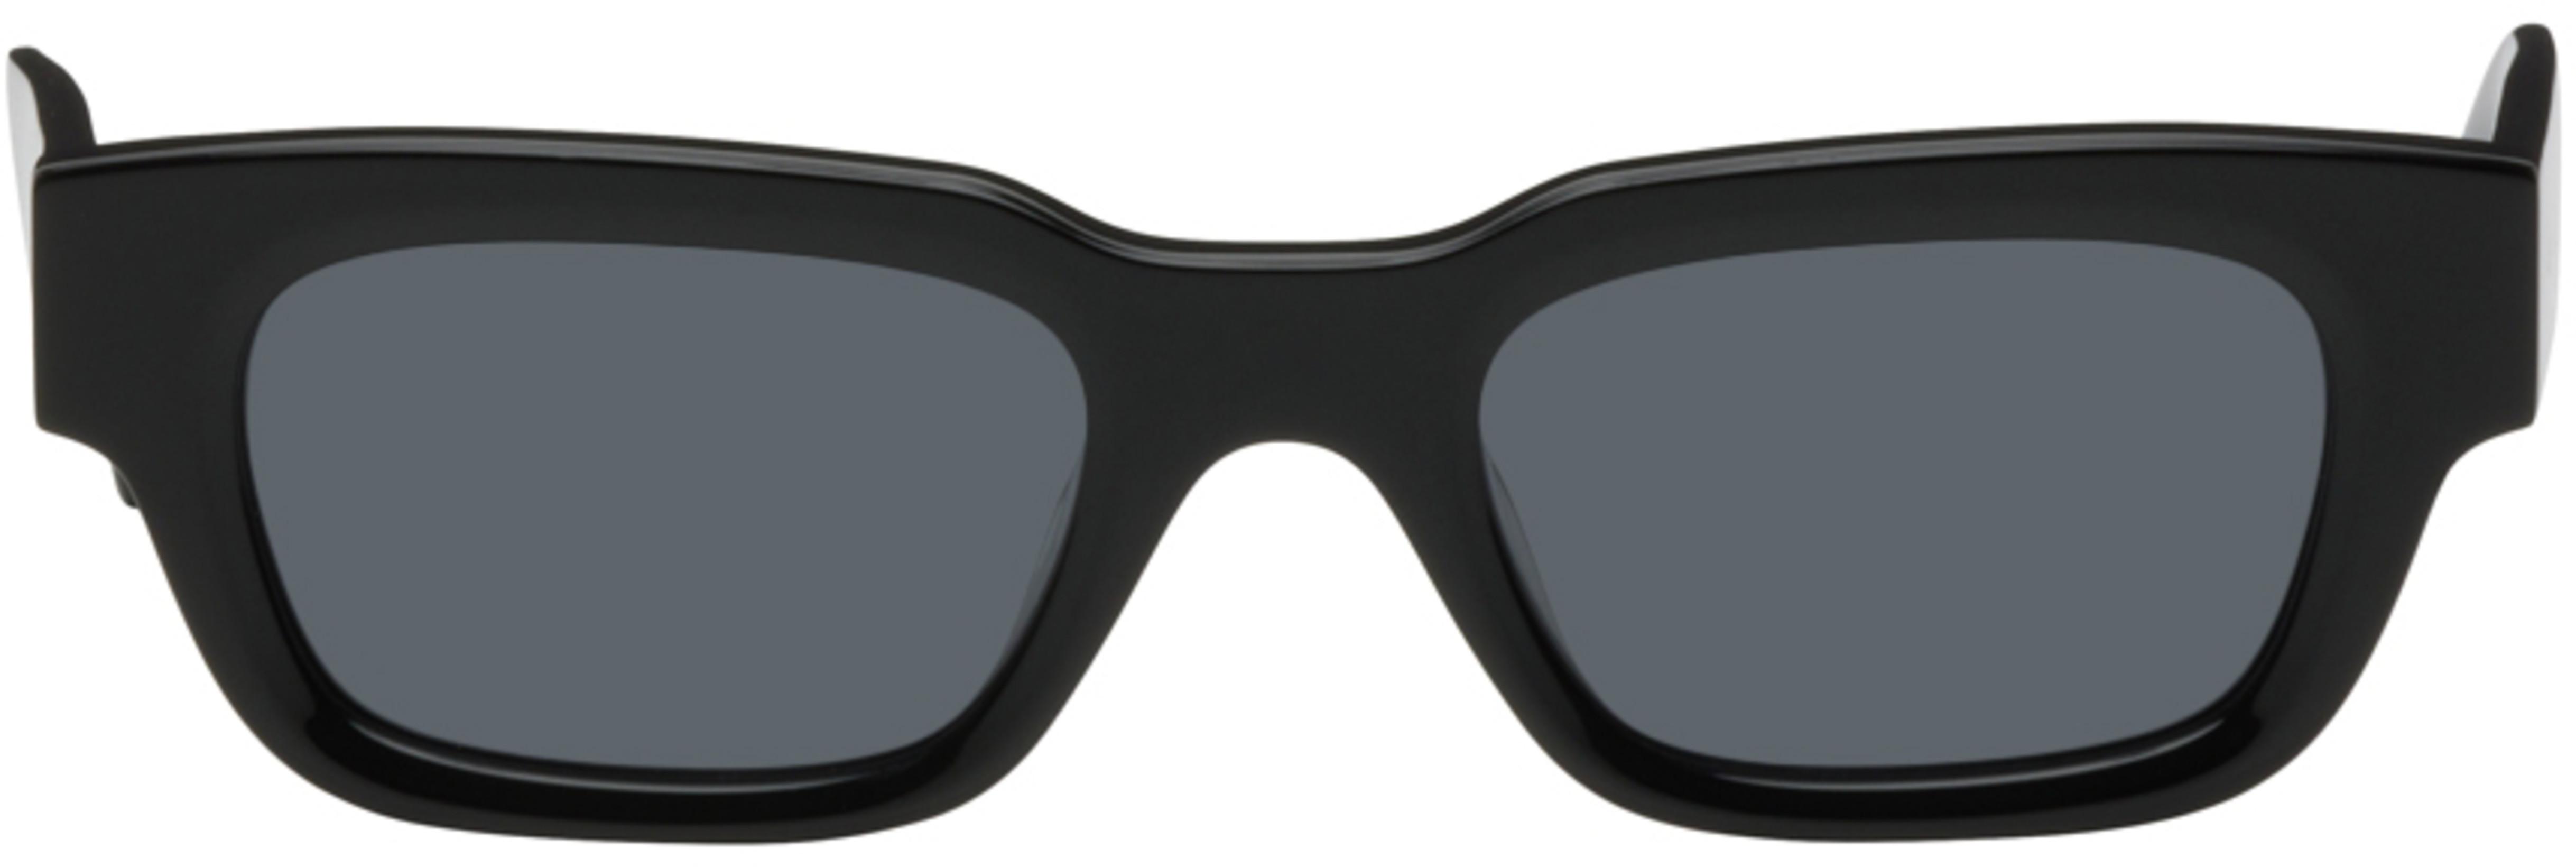 Black Zed Sunglasses by AKILA